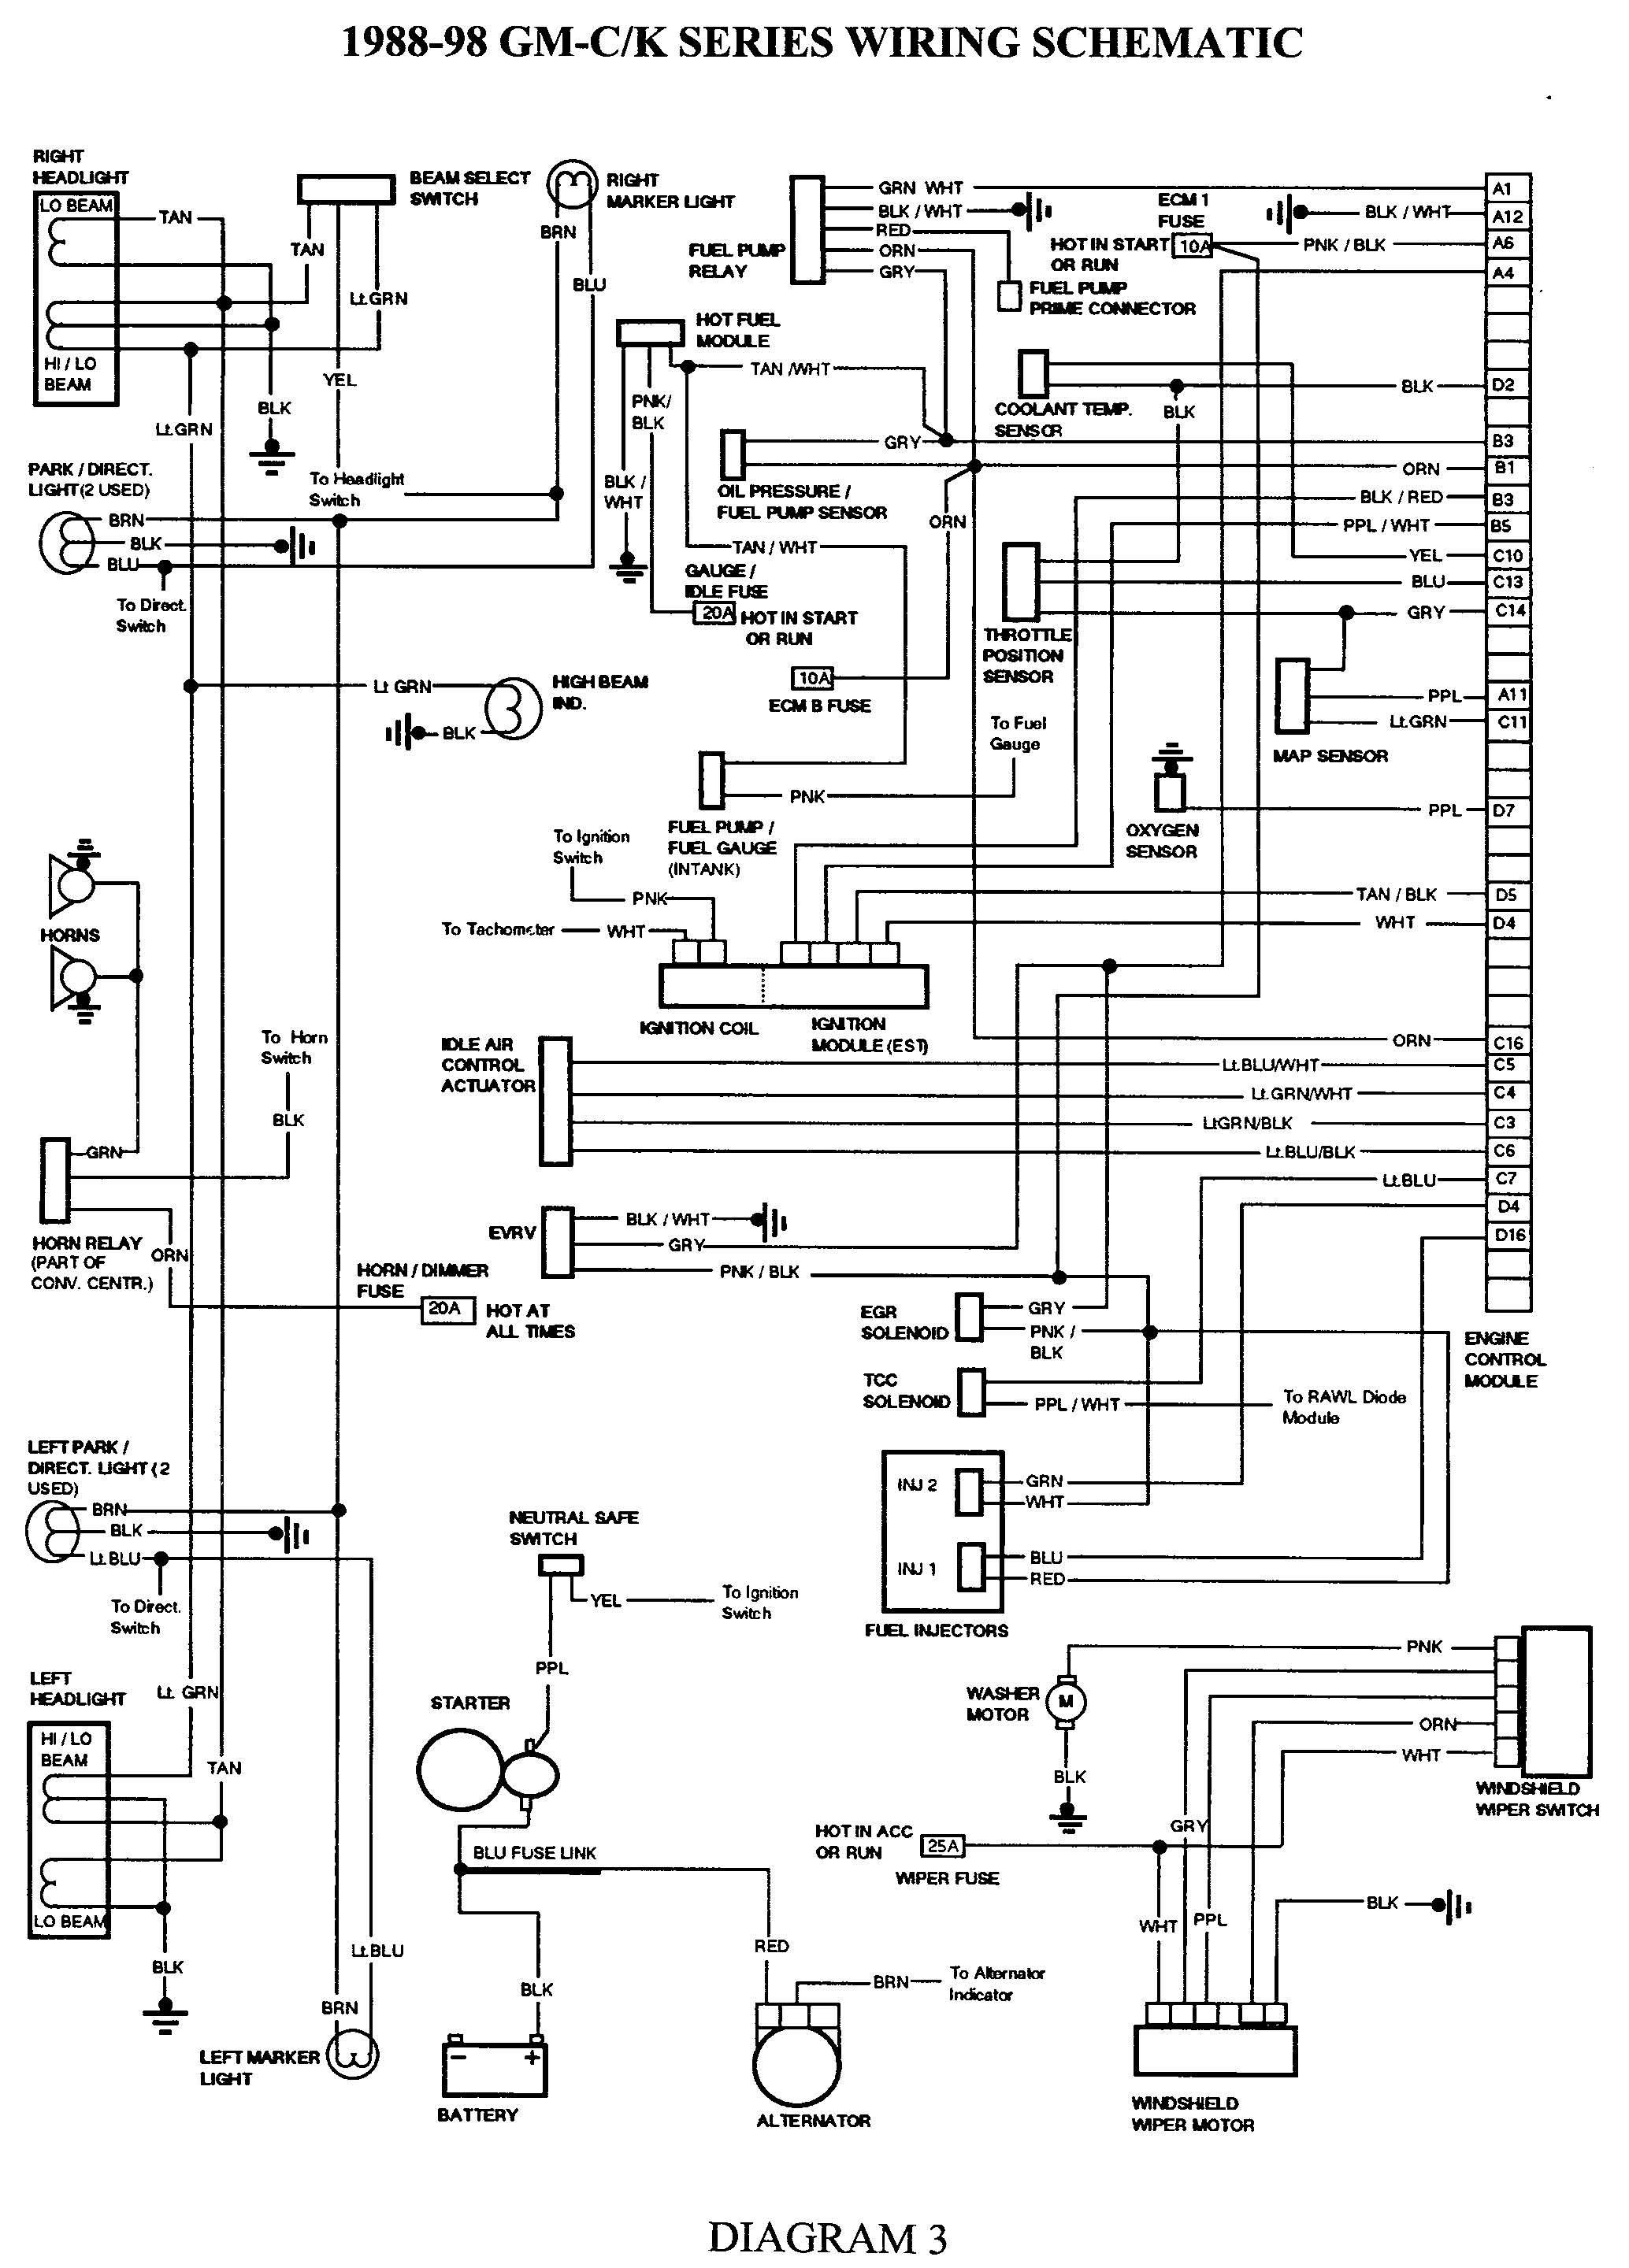 tbi coil diagram house wiring diagram symbols u2022 rh wiringdiagramnews today Chevy 350 TBI Wiring